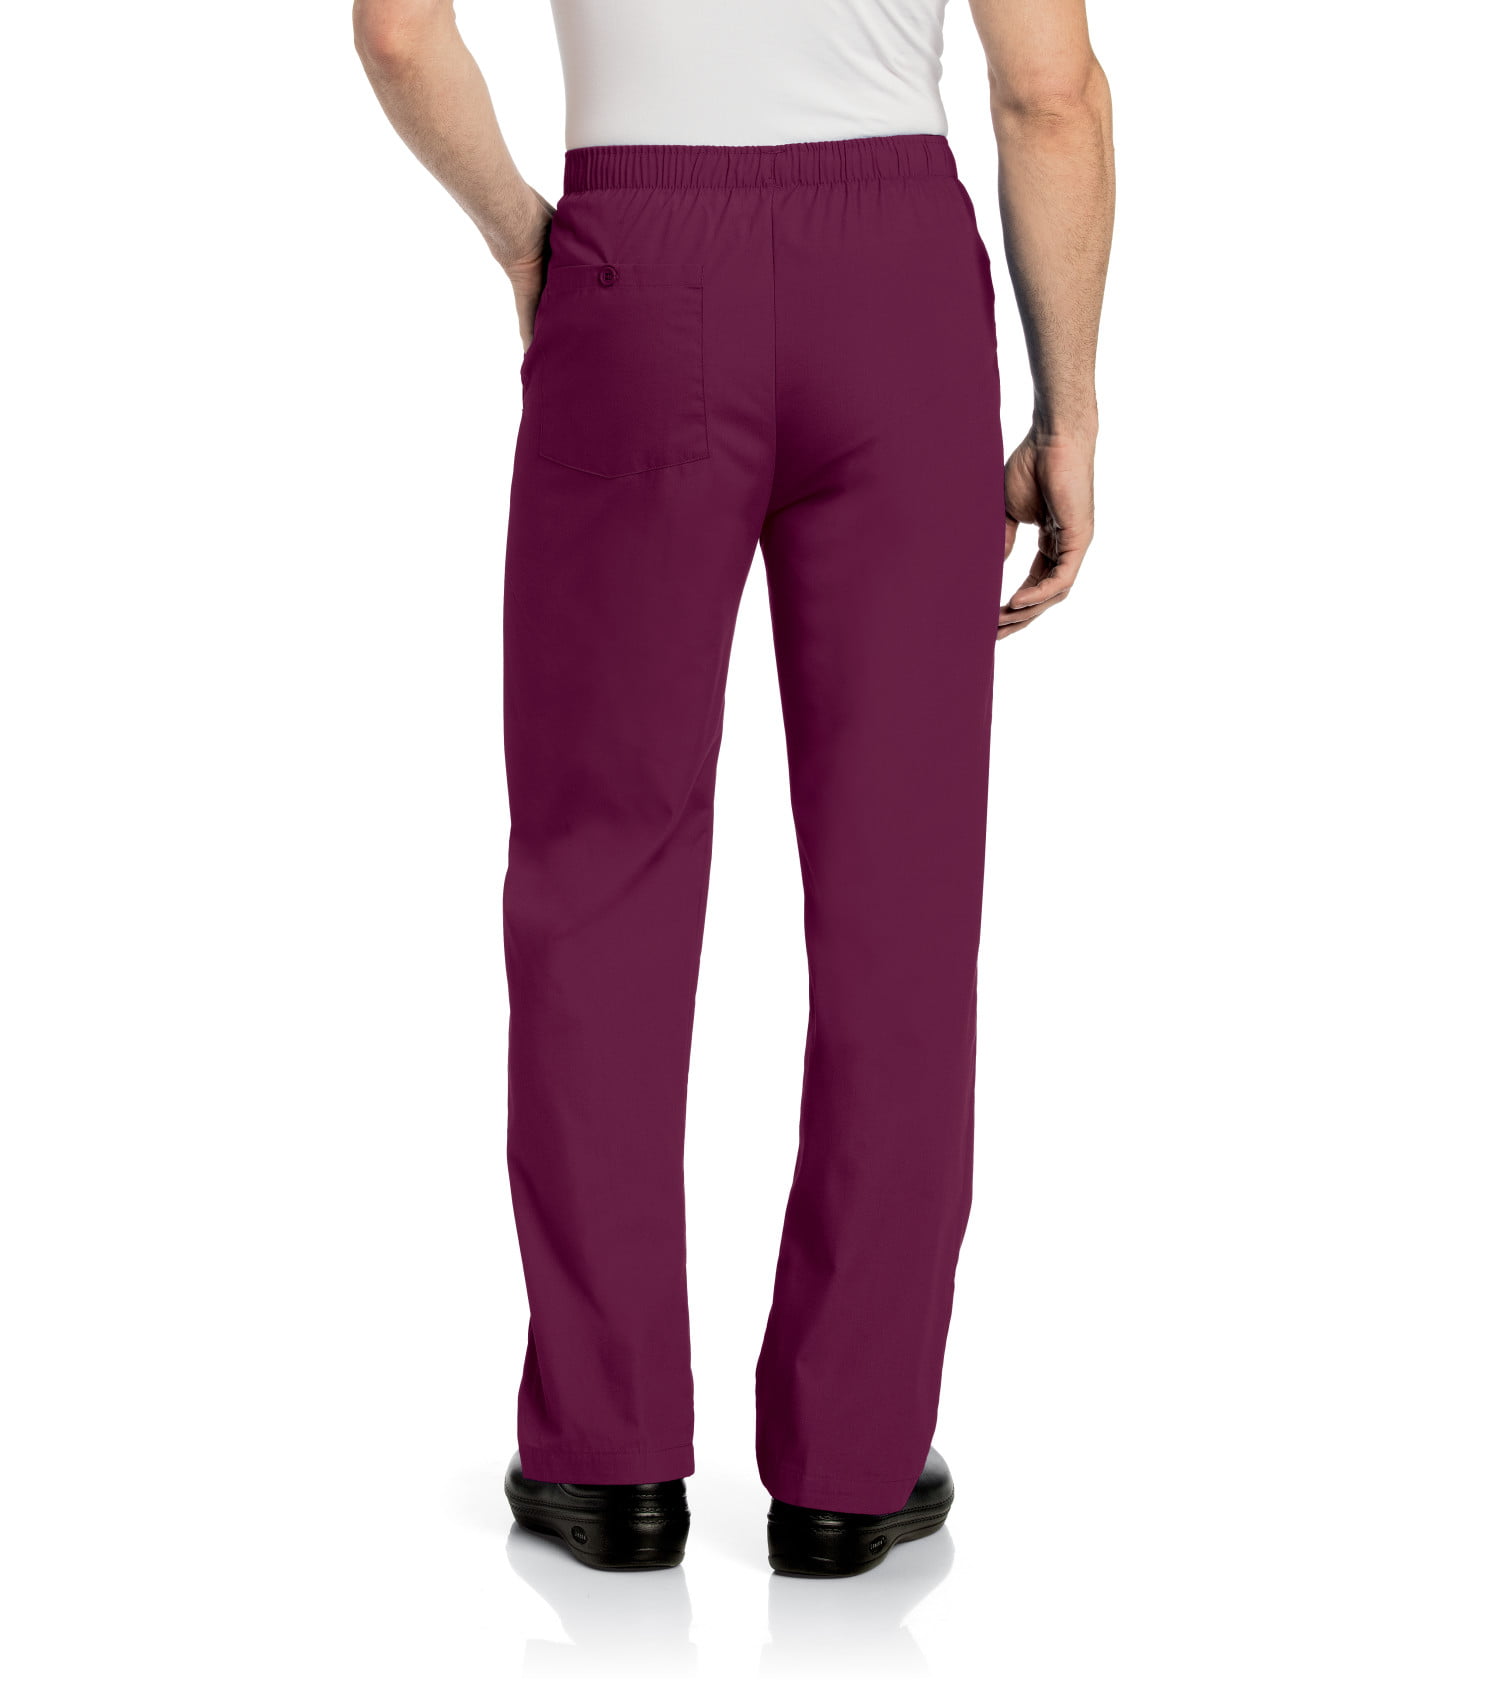 Landau Essentials Relaxed Fit 3-Pocket Elastic Scrub Pants for Men 8550 